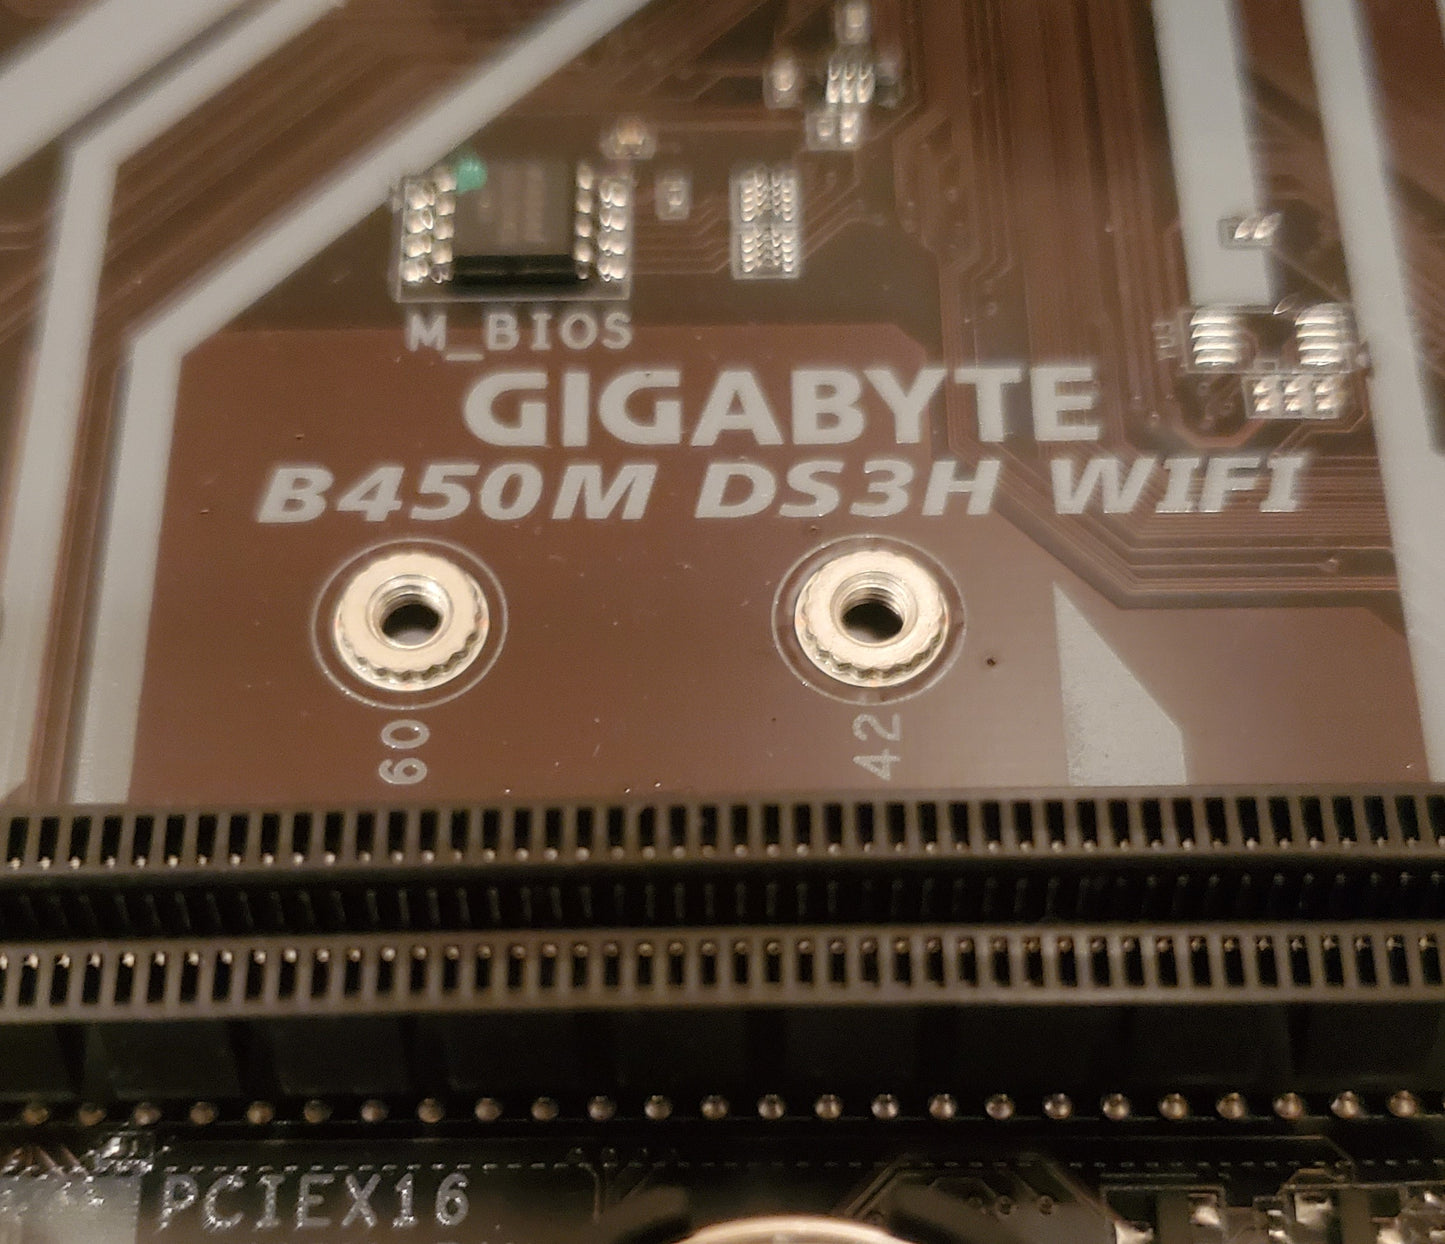 Gigabyte B450M Wi-Fi Motherboard